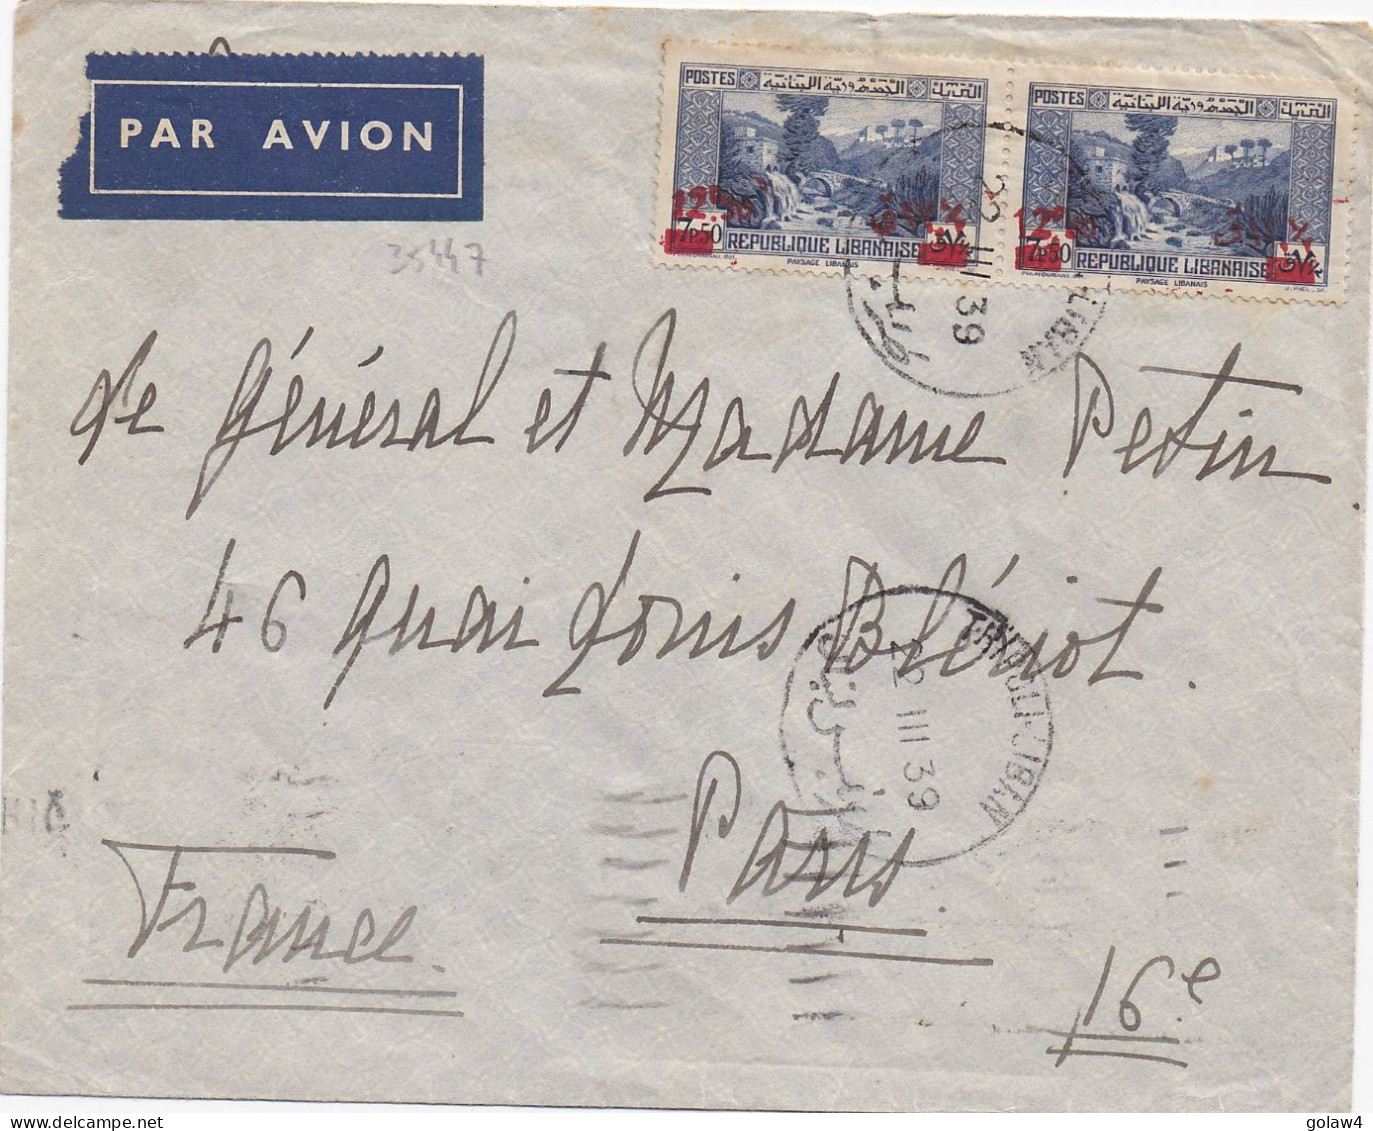 35447# LETTRE PAR AVION Obl TRIPOLI LIBAN 22 III 1939 Pour GENERAL PETIN PARIS Via BEYROUTH LEBANON - Storia Postale